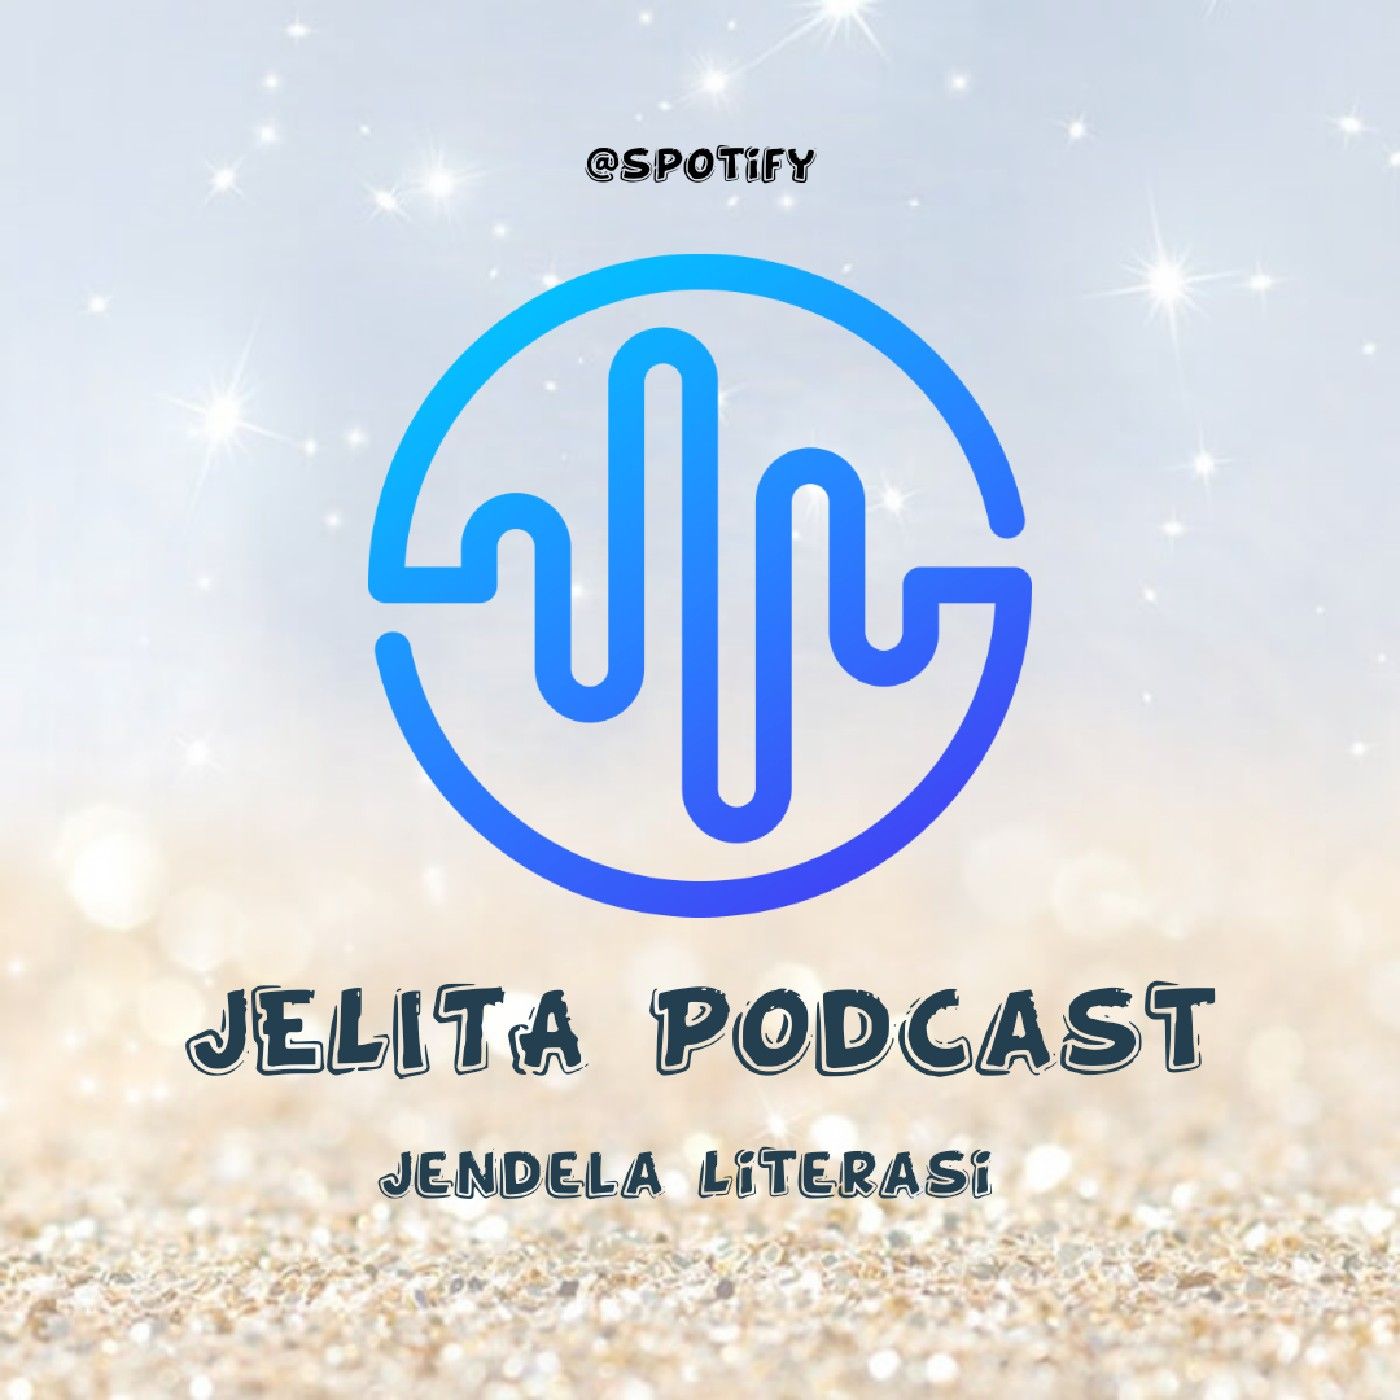 Jelita podcast (Jendela Literasi)